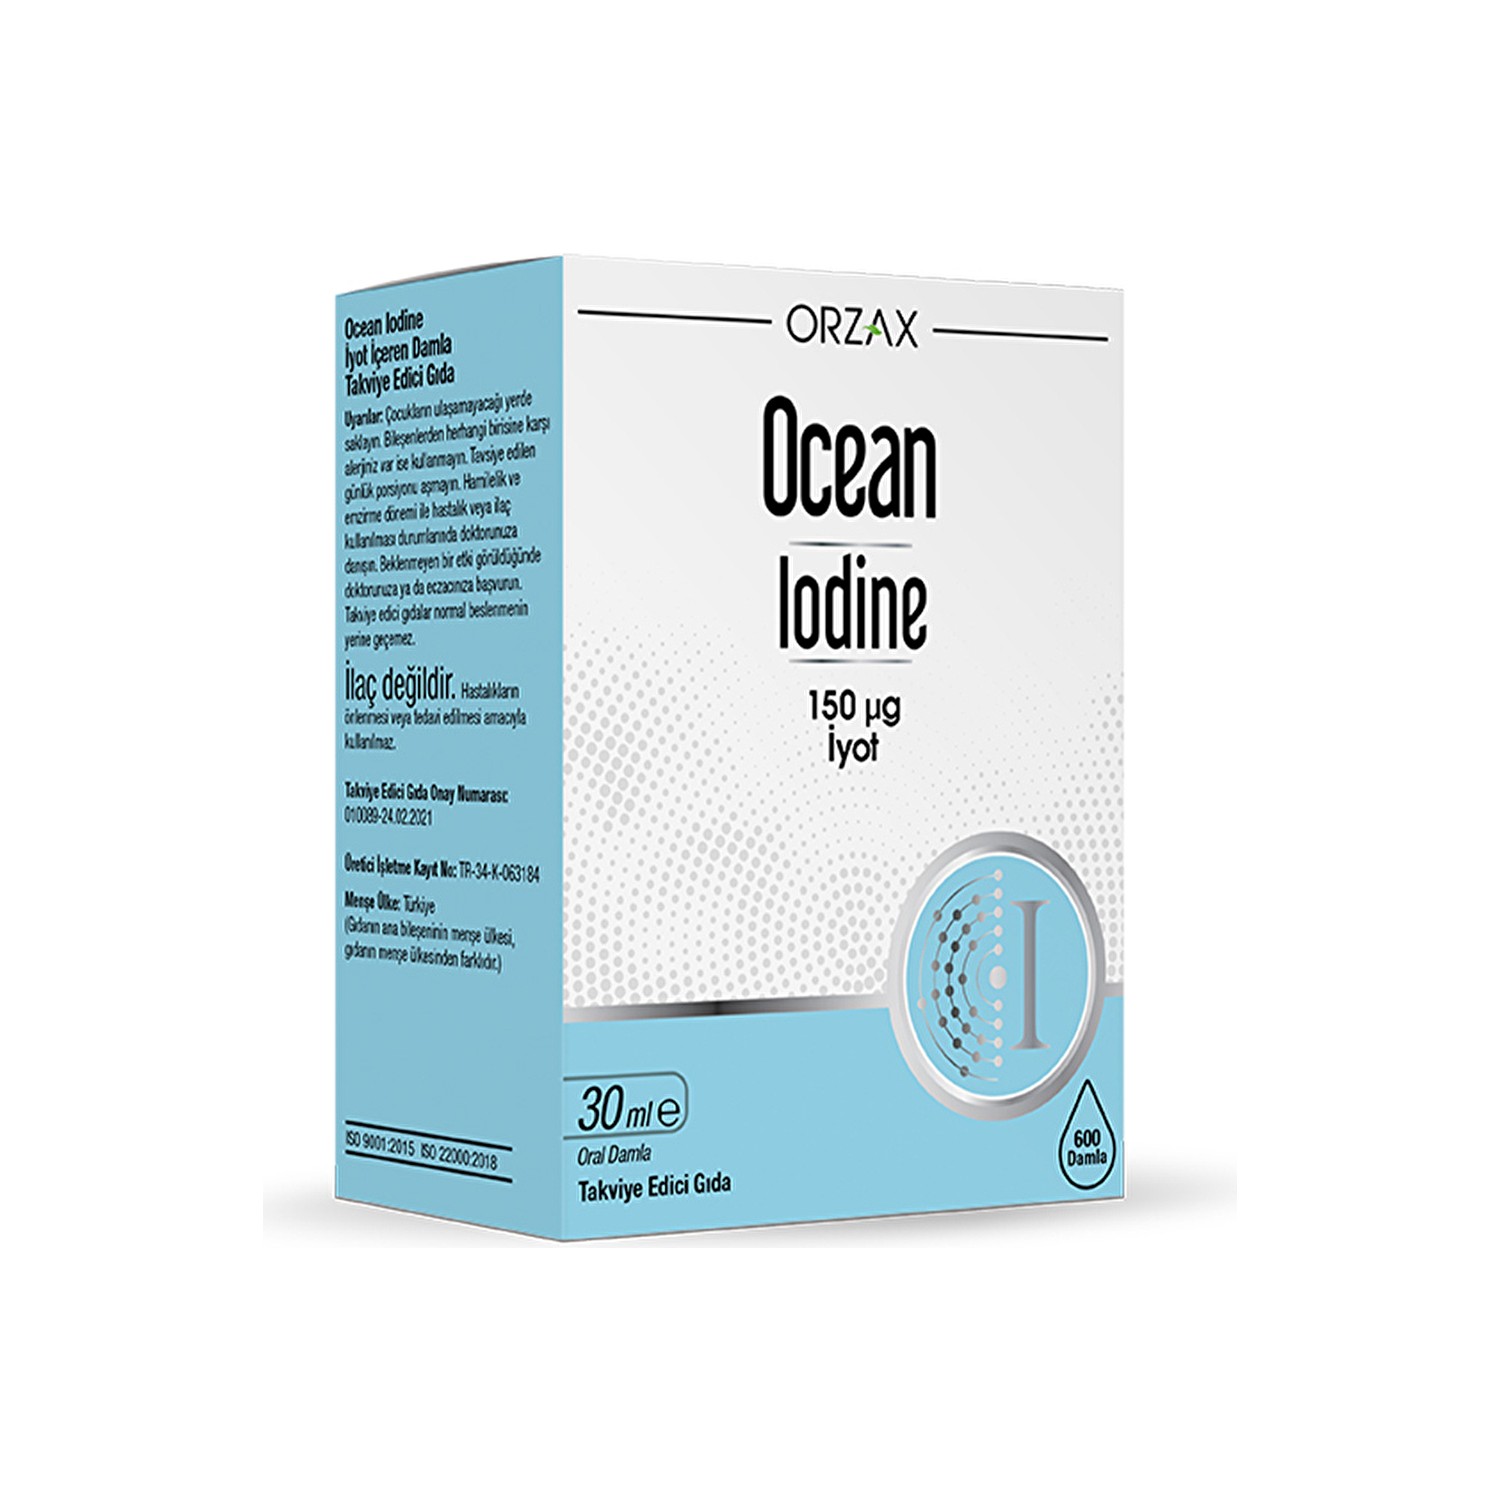 Мкг в каплях. Йод 150 мкг. Йод капли Orzax. Orzax Ocean Iodine 150 MCG 30 ml Drop. Orzax Ocean Iodine 150.